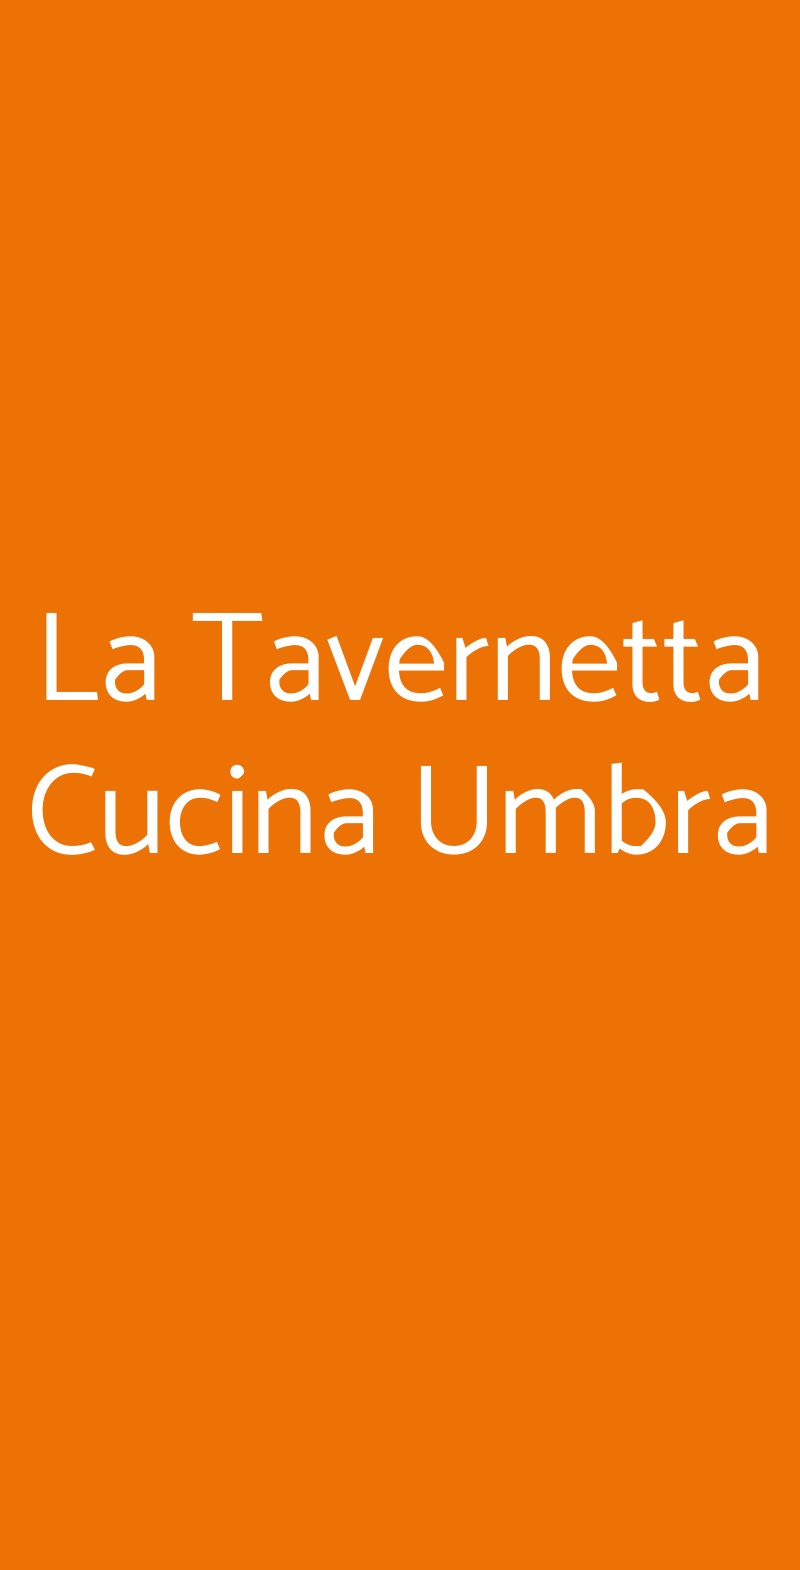 La Tavernetta Cucina Umbra Roma menù 1 pagina